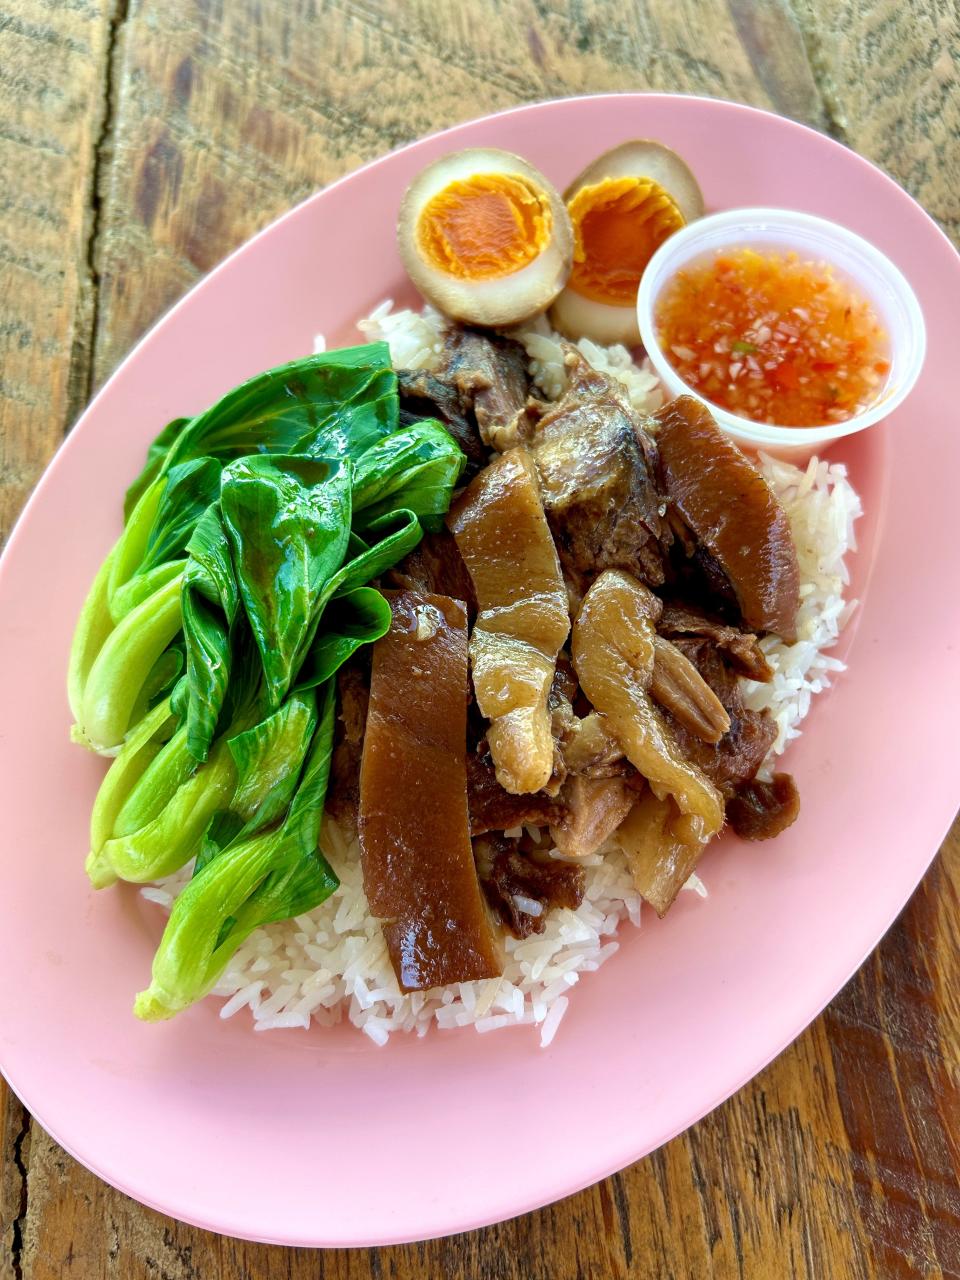 Cassia's menu features Kao Ka Moo, soy-braised pork shanks with bok choi, egg and jasmine rice.